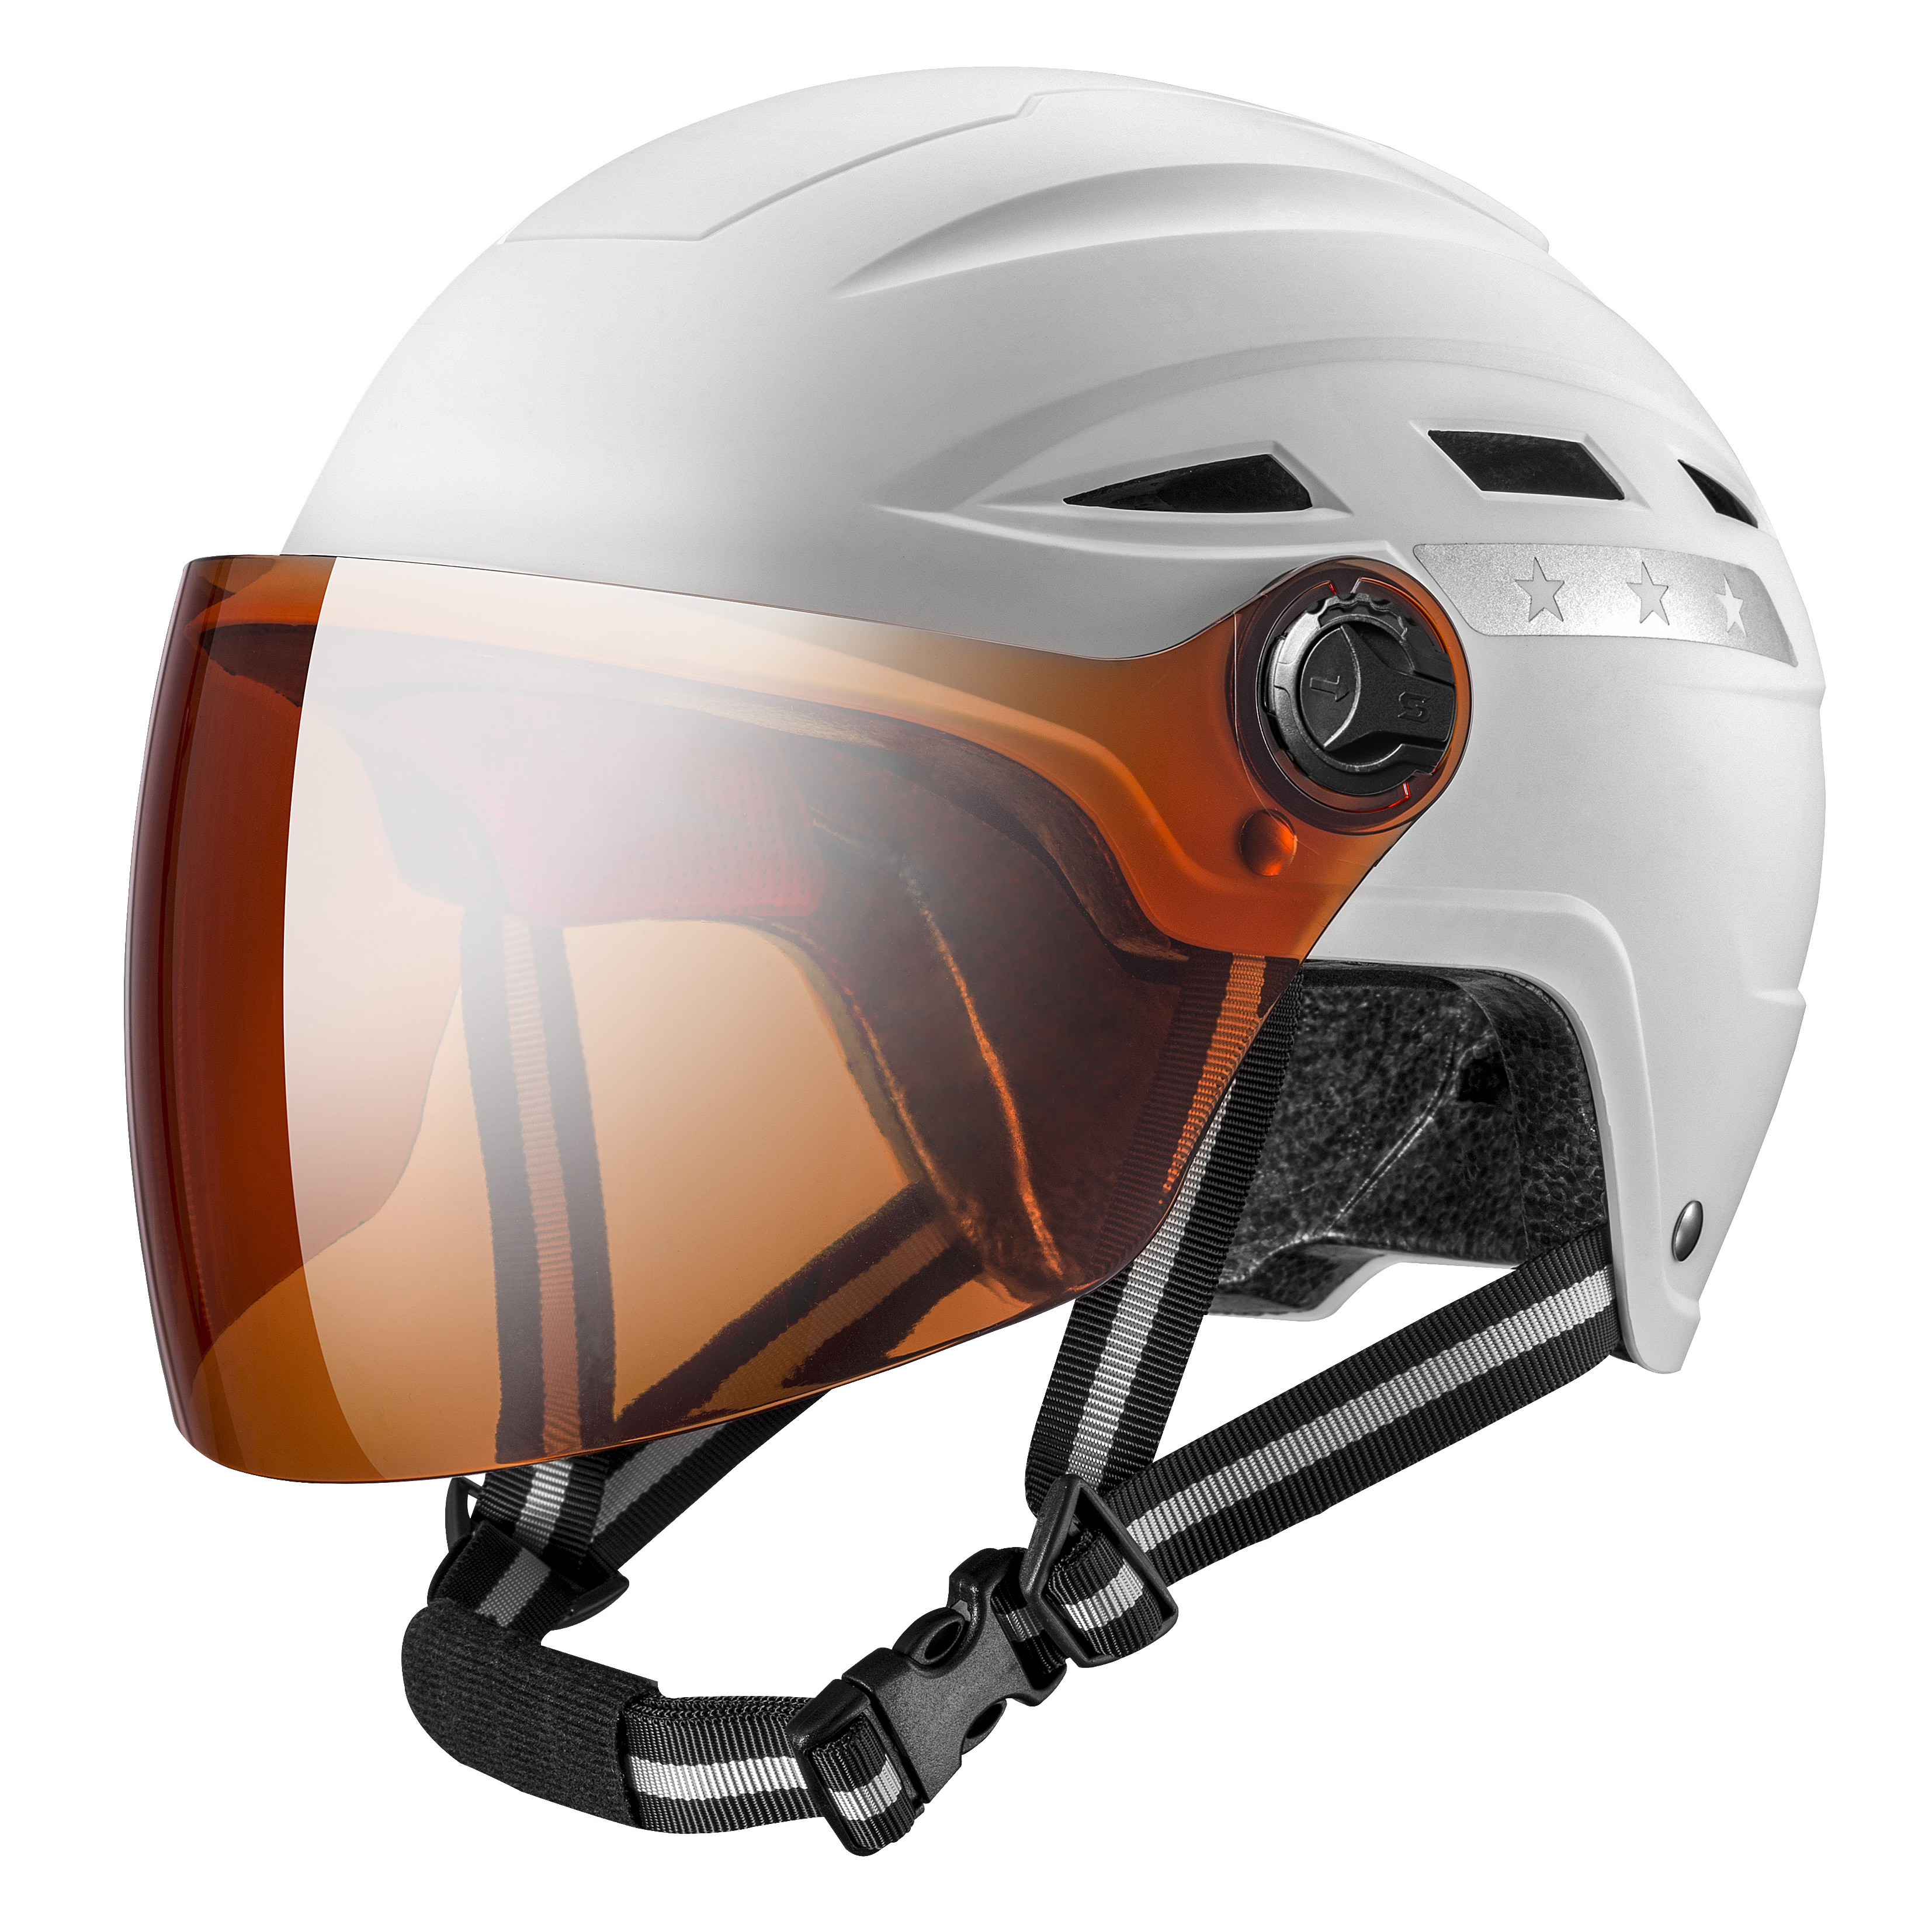 E1-8G E-Bike Helmet with goggles